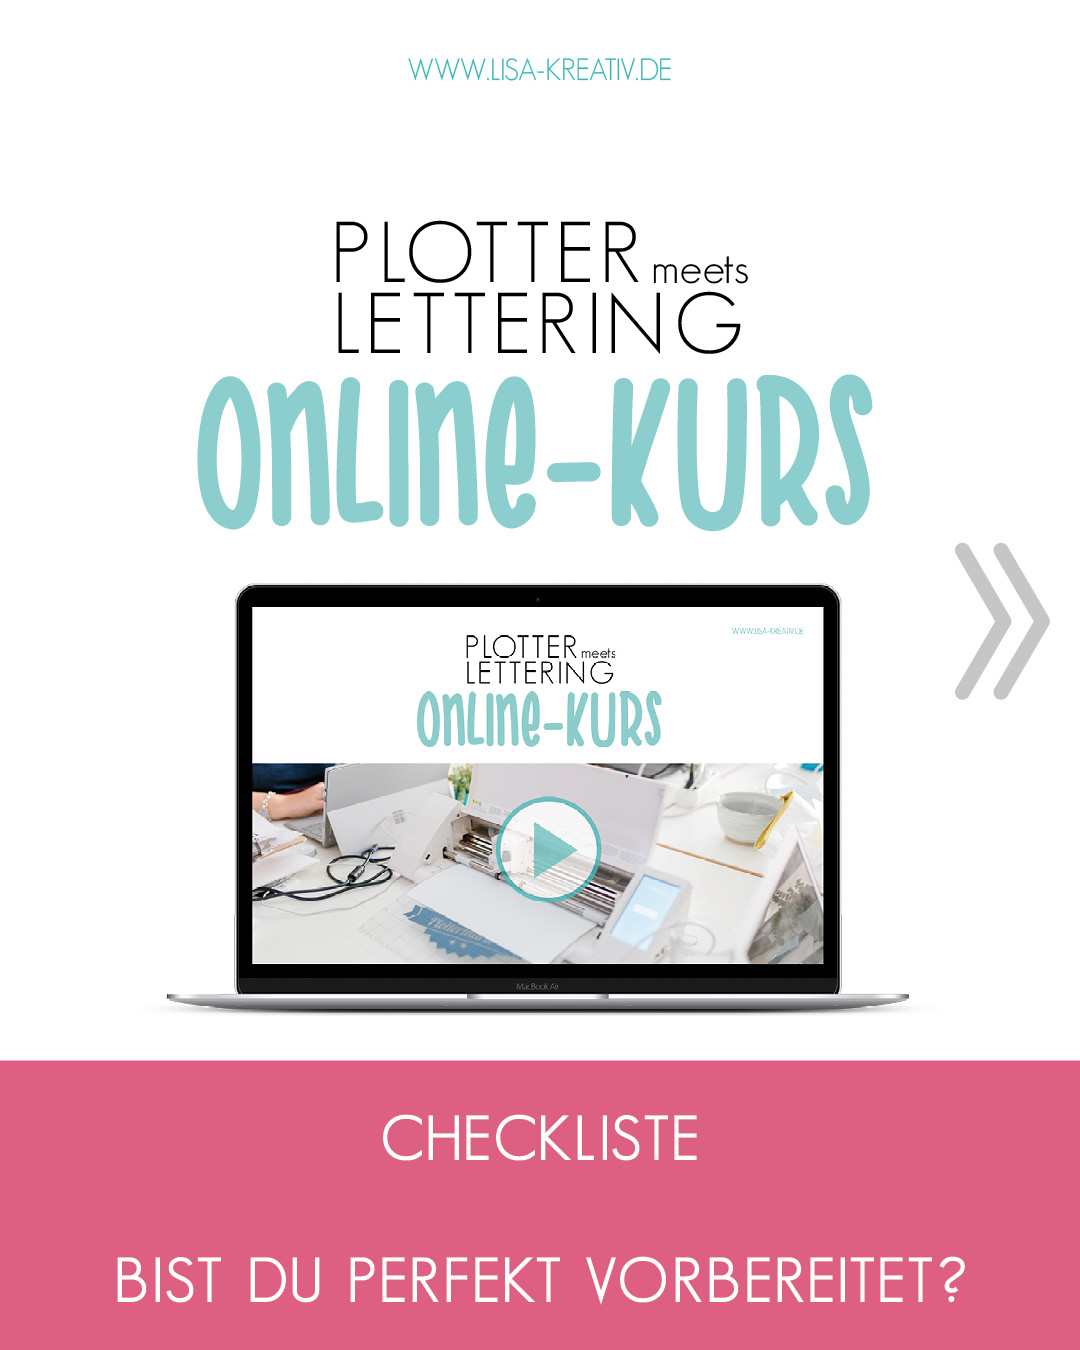 Plotter meets Lettering Online-Kurs